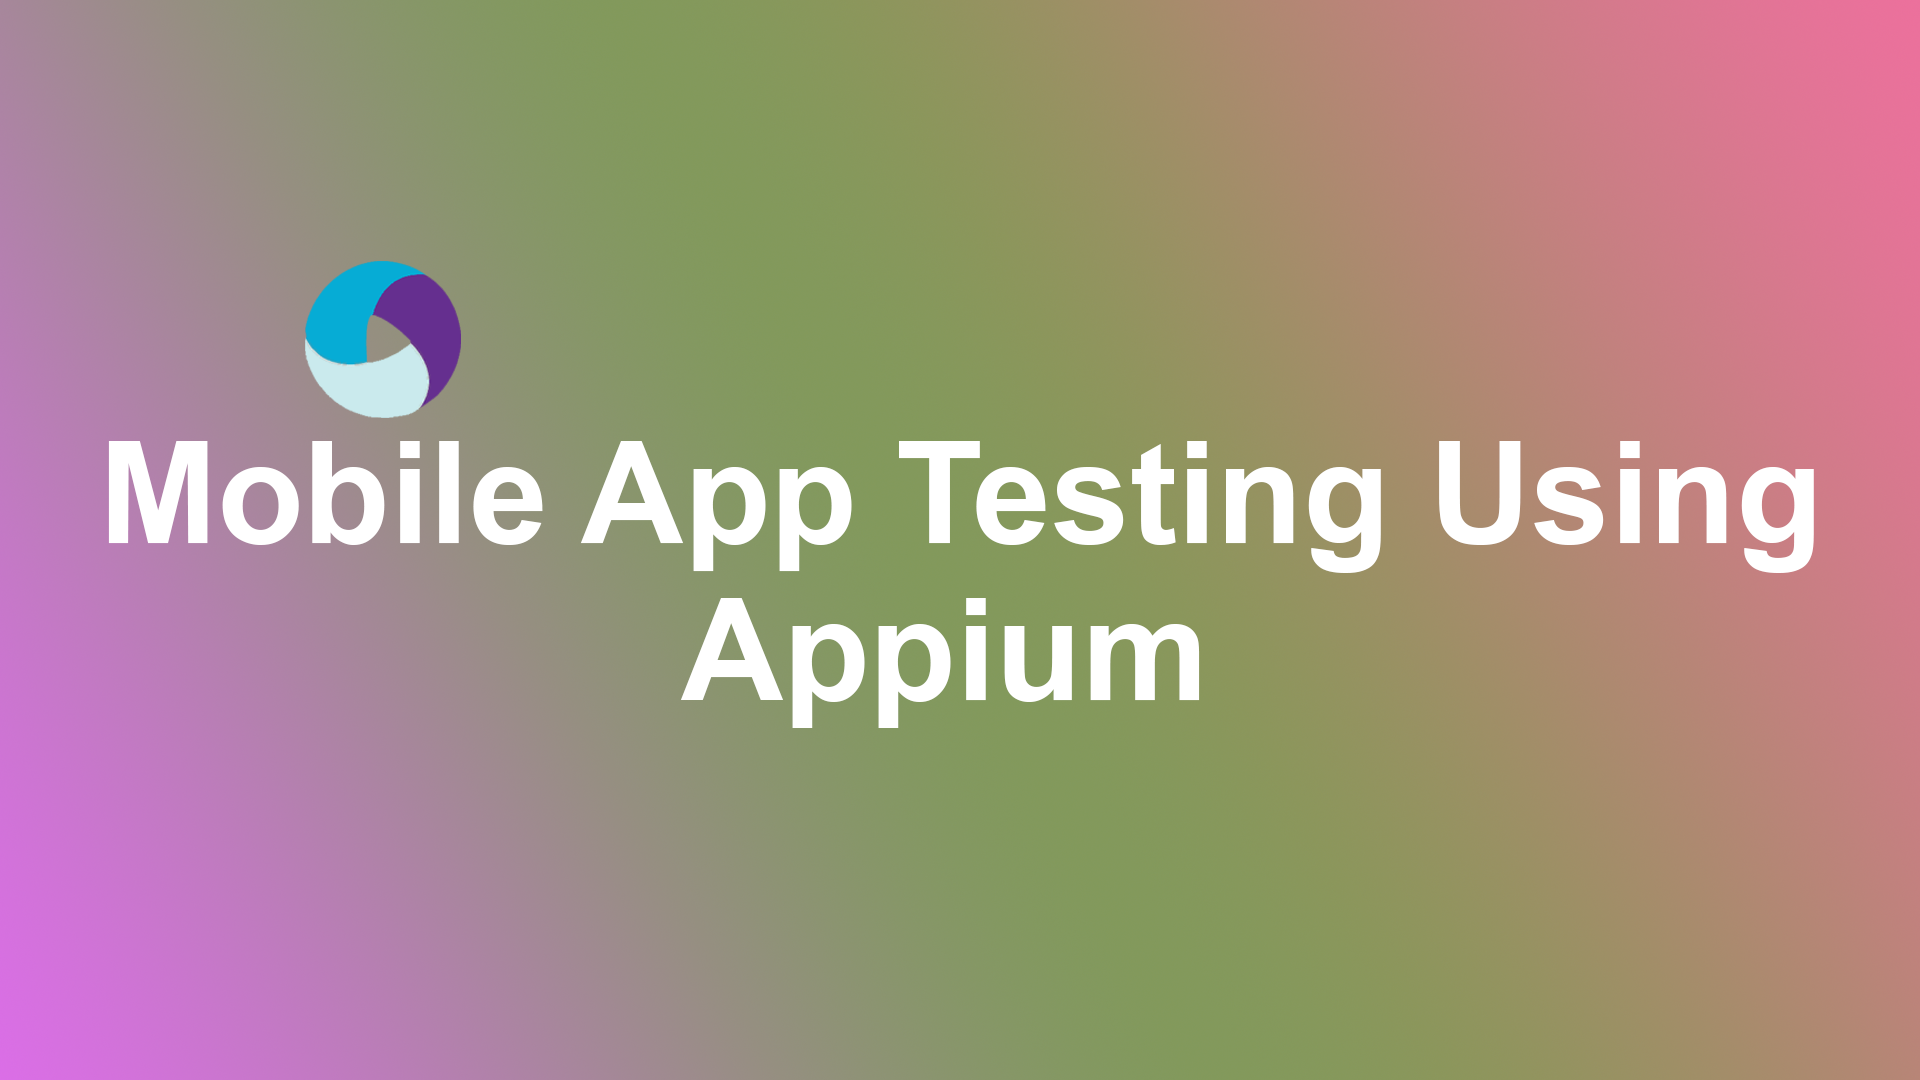 Mobile App Testing Using Appium Course